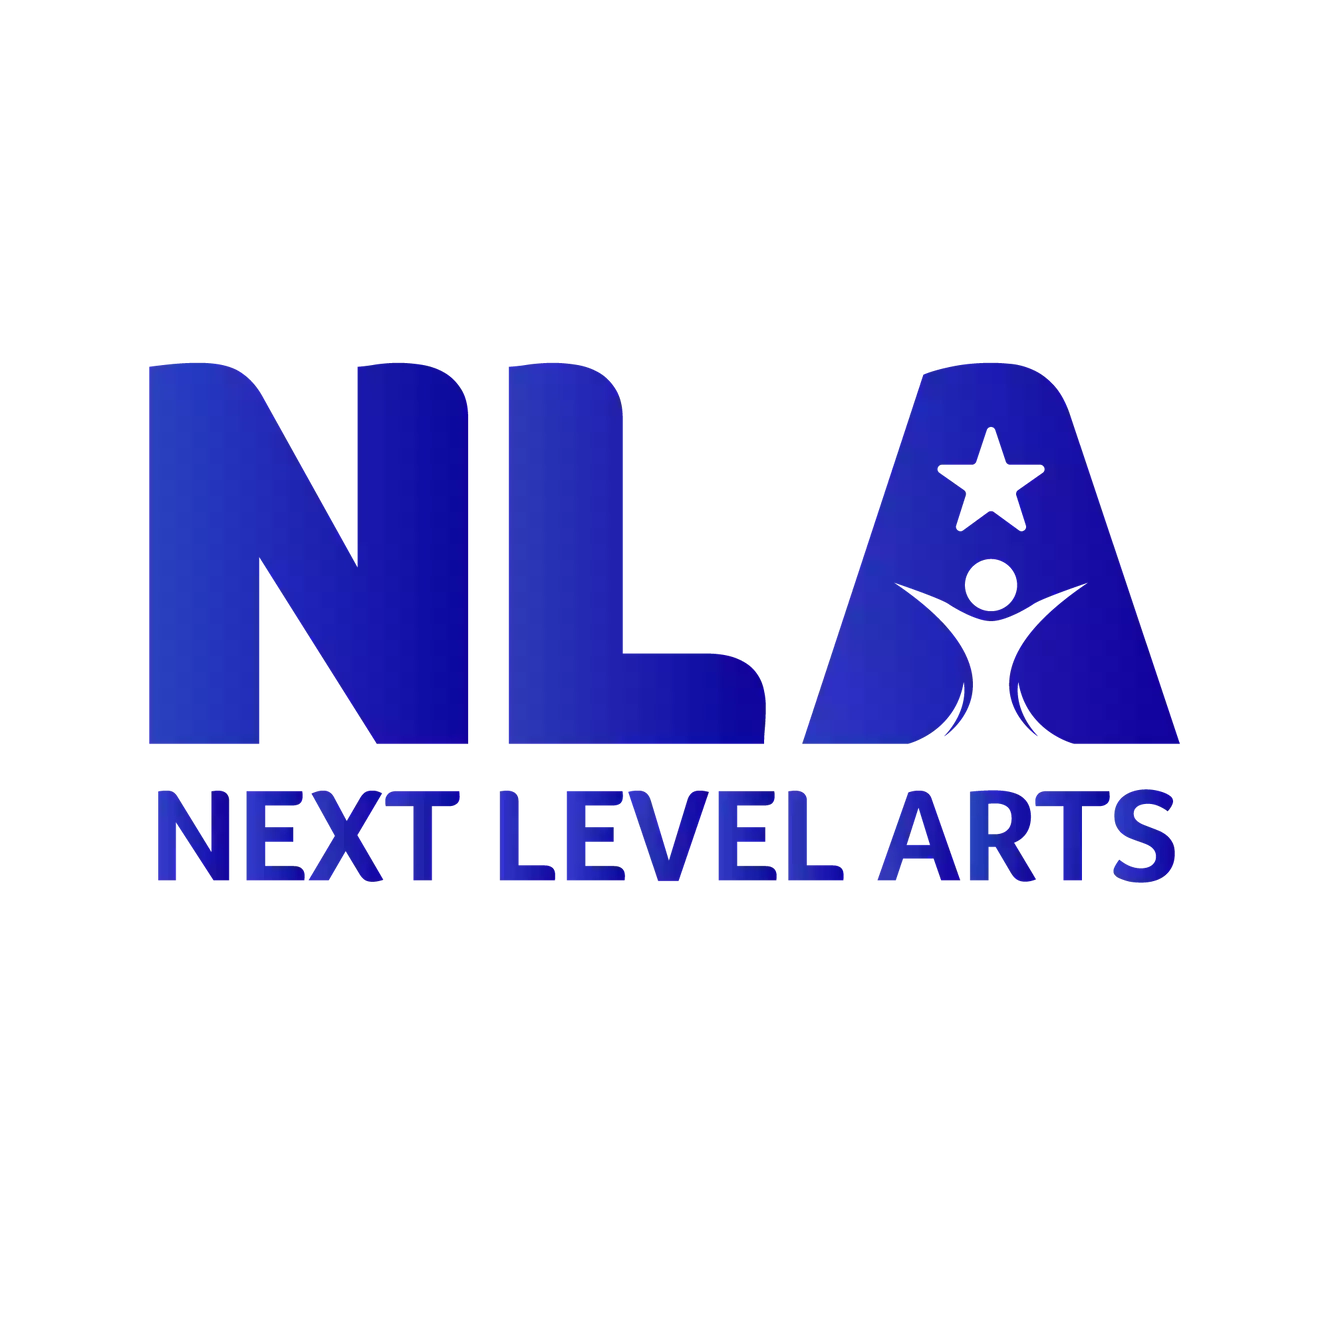 Next Level Arts